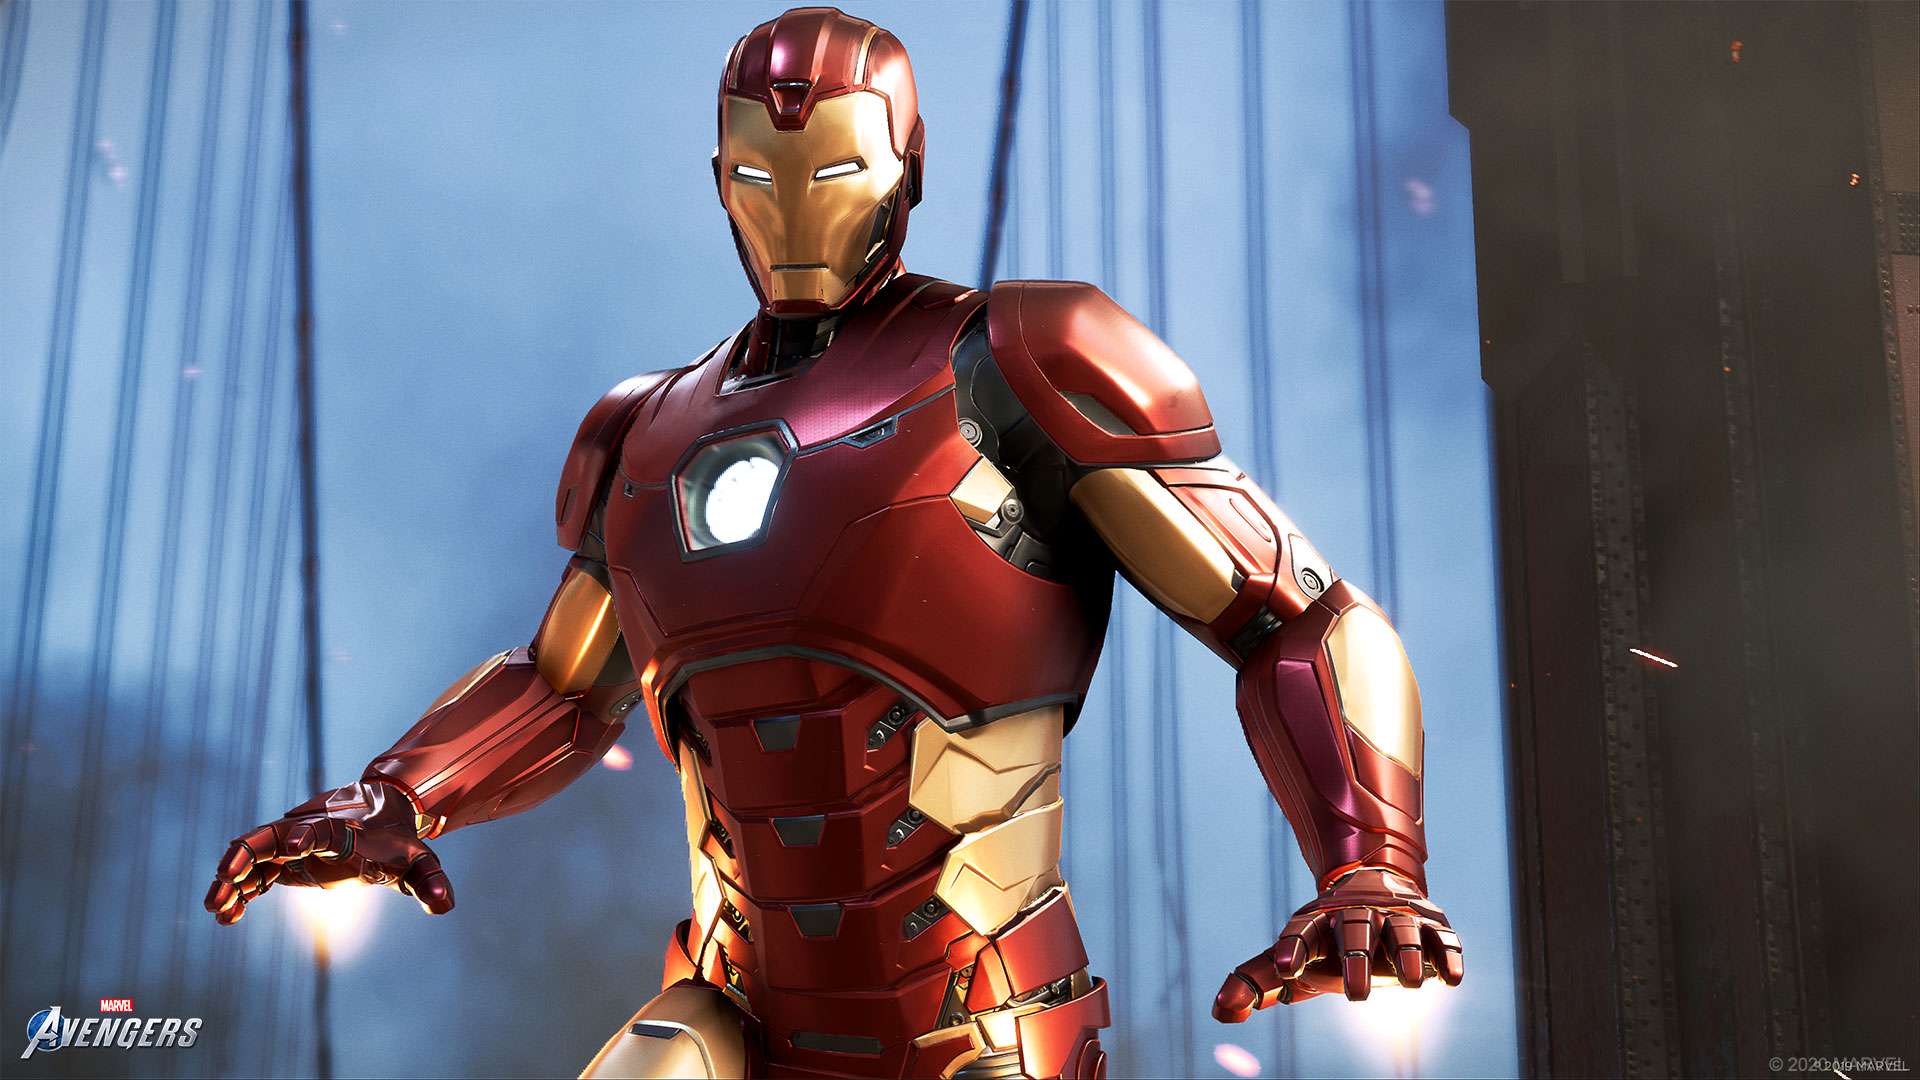 Marvel Avengers Ultron Iron Man Hulk Buster-Serie Modell Spielzeug-Action-Charak 